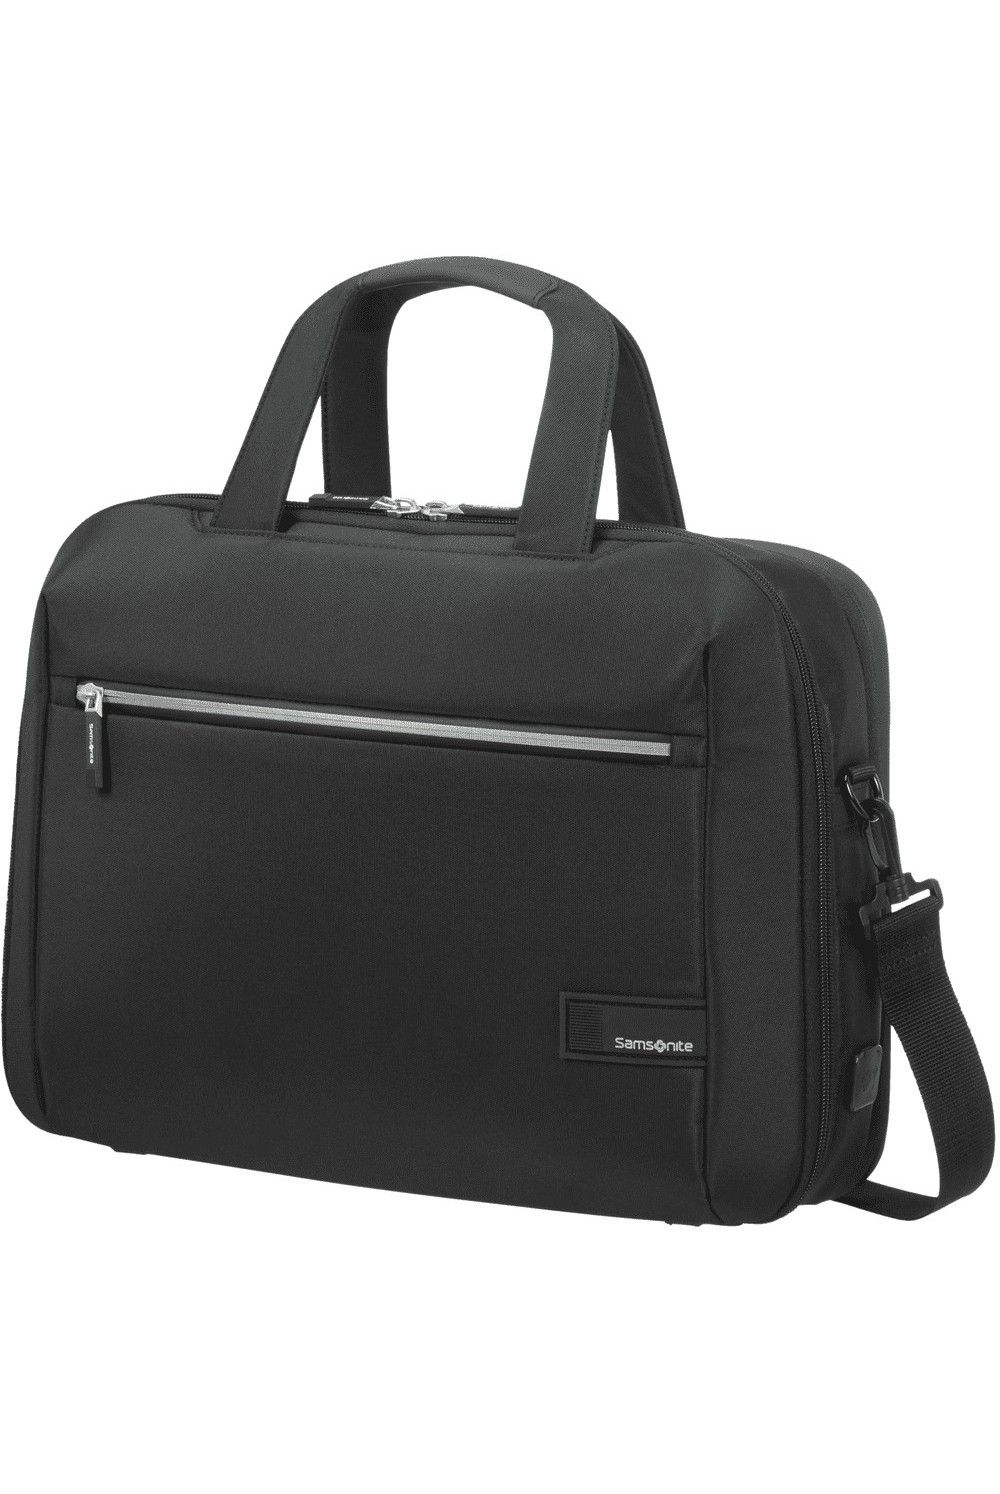 Samsonite Litepoint Laptop Bags 15,6 pouces